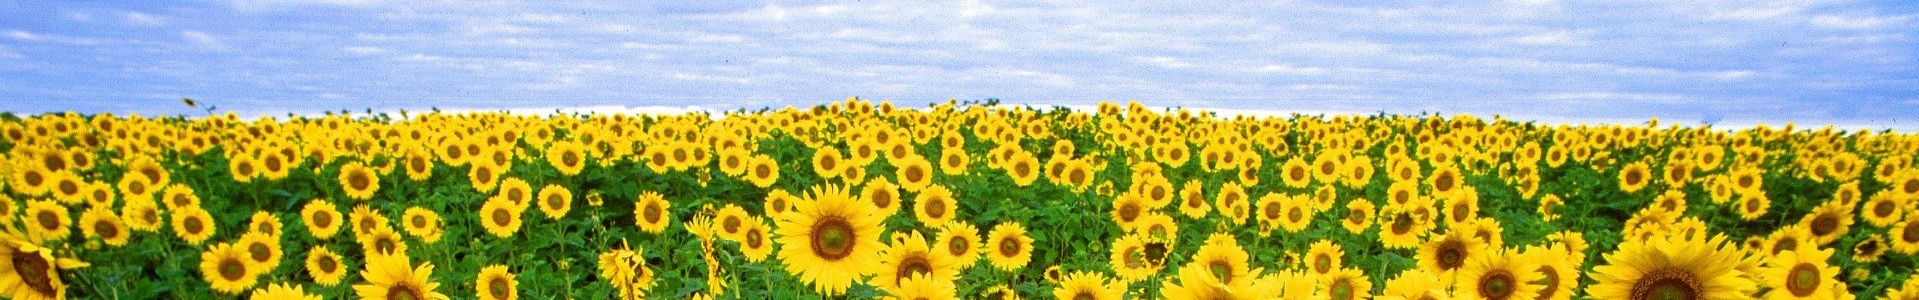 Sunflower_1920x300